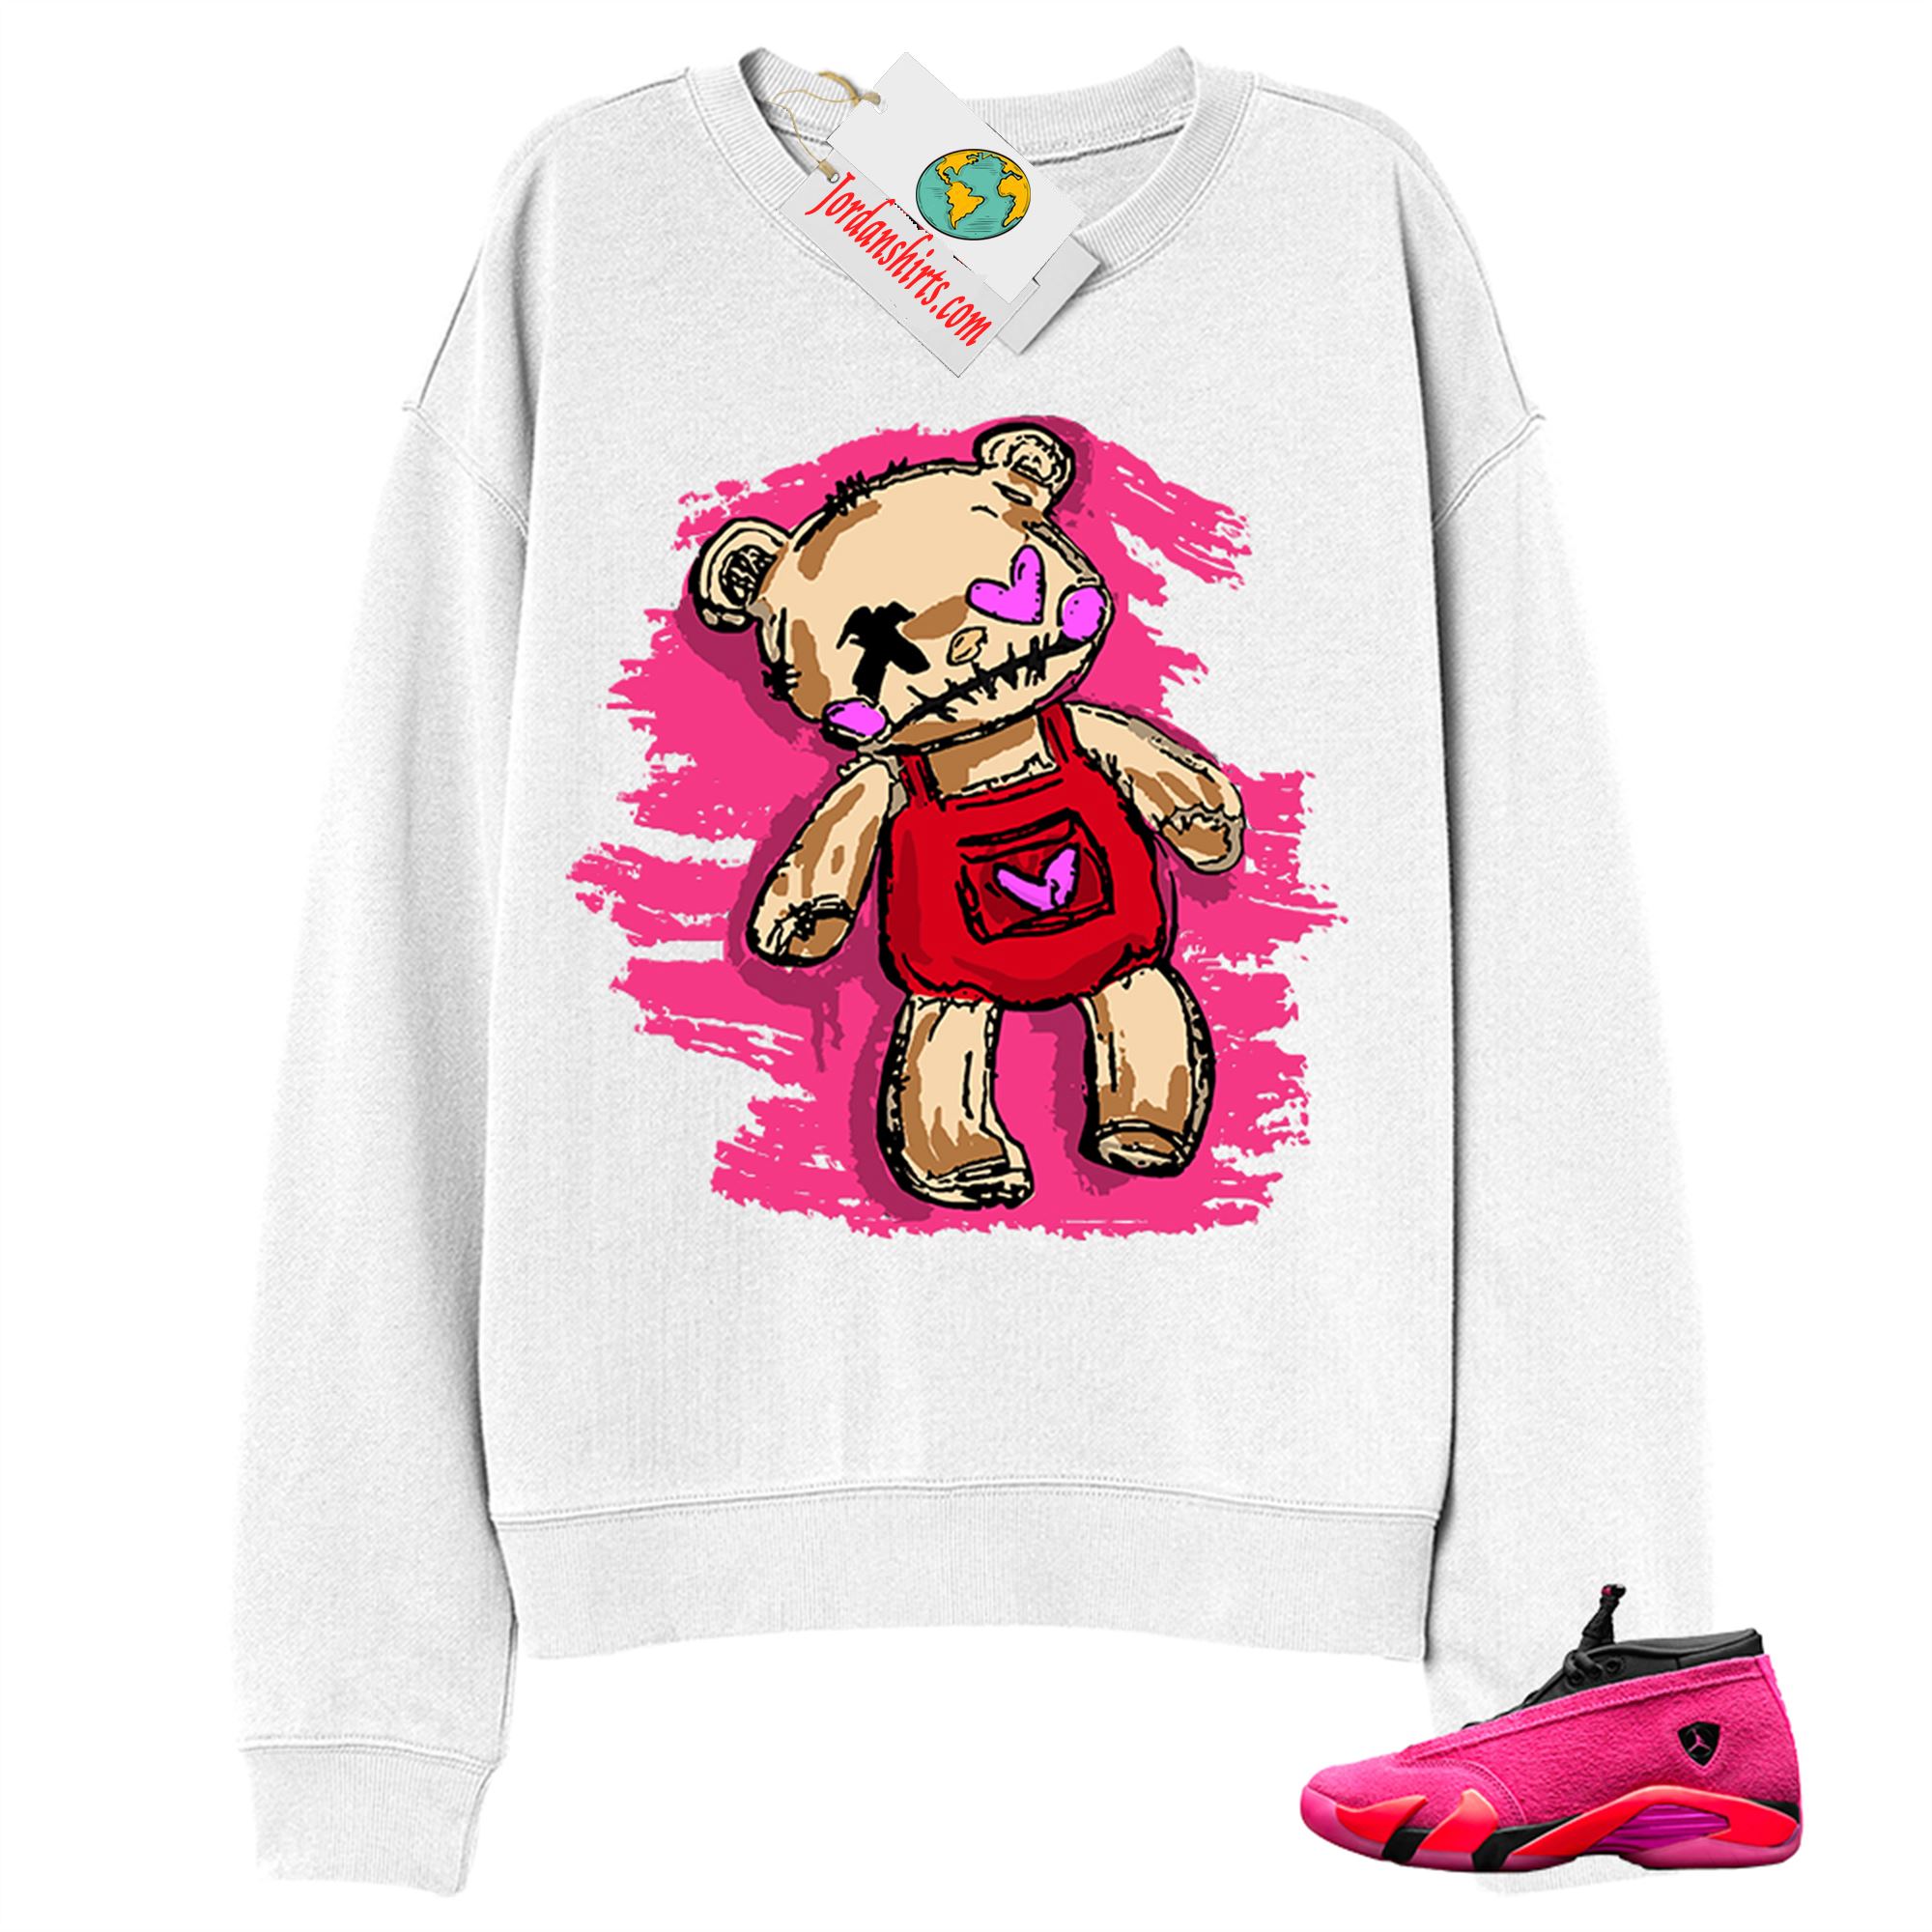 Jordan 14 Sweatshirt, Teddy Bear Broken Heart White Sweatshirt Air Jordan 14 Wmns Shocking Pink 14s Size Up To 5xl